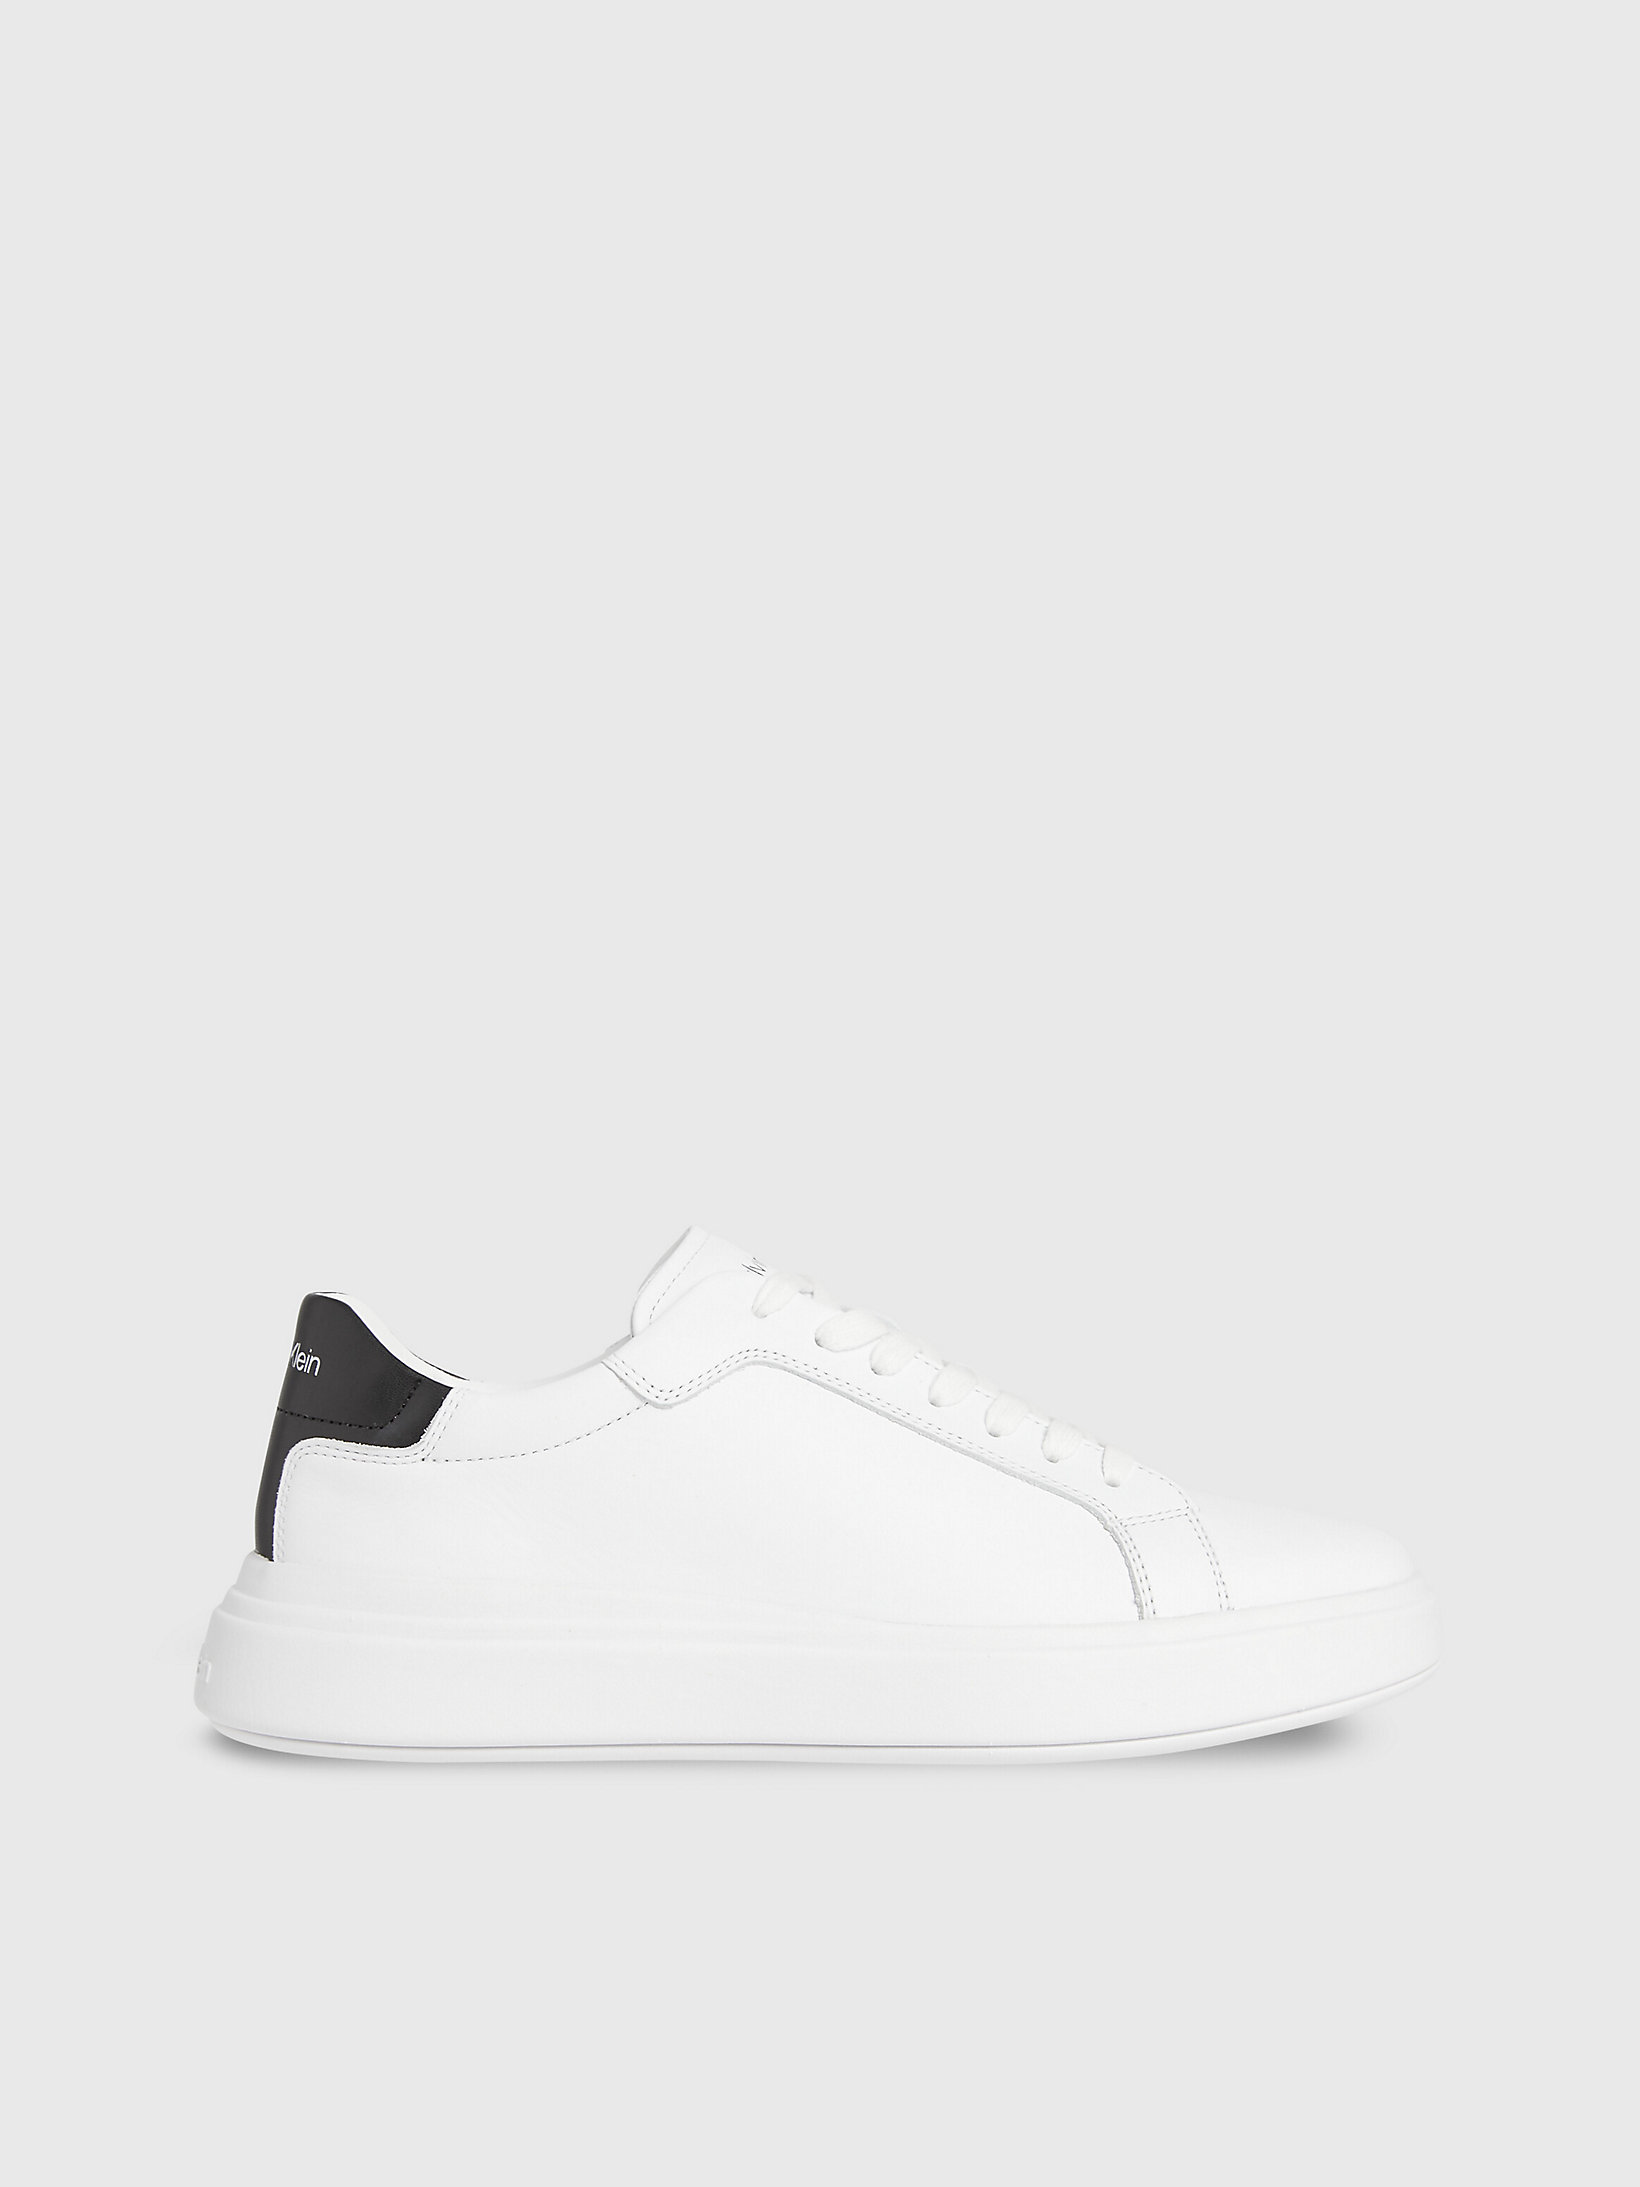 Sneaker In Pelle > White / Black > undefined uomo > Calvin Klein